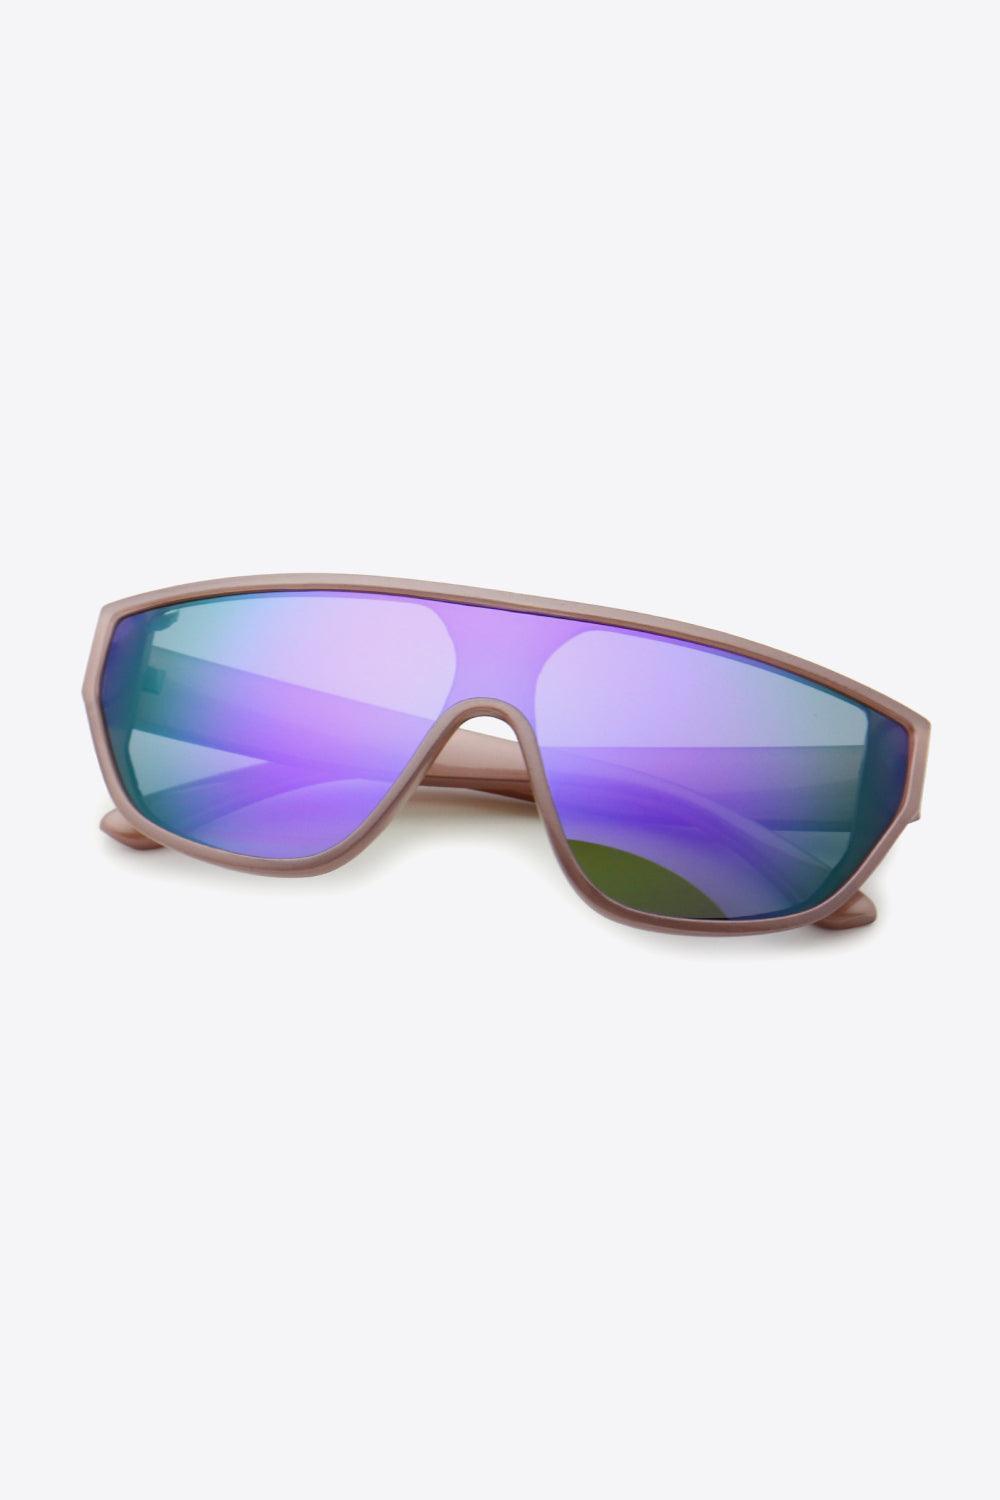 Glamorous UV400 Wayfarer Polycarbonate Sunglasses - MXSTUDIO.COM